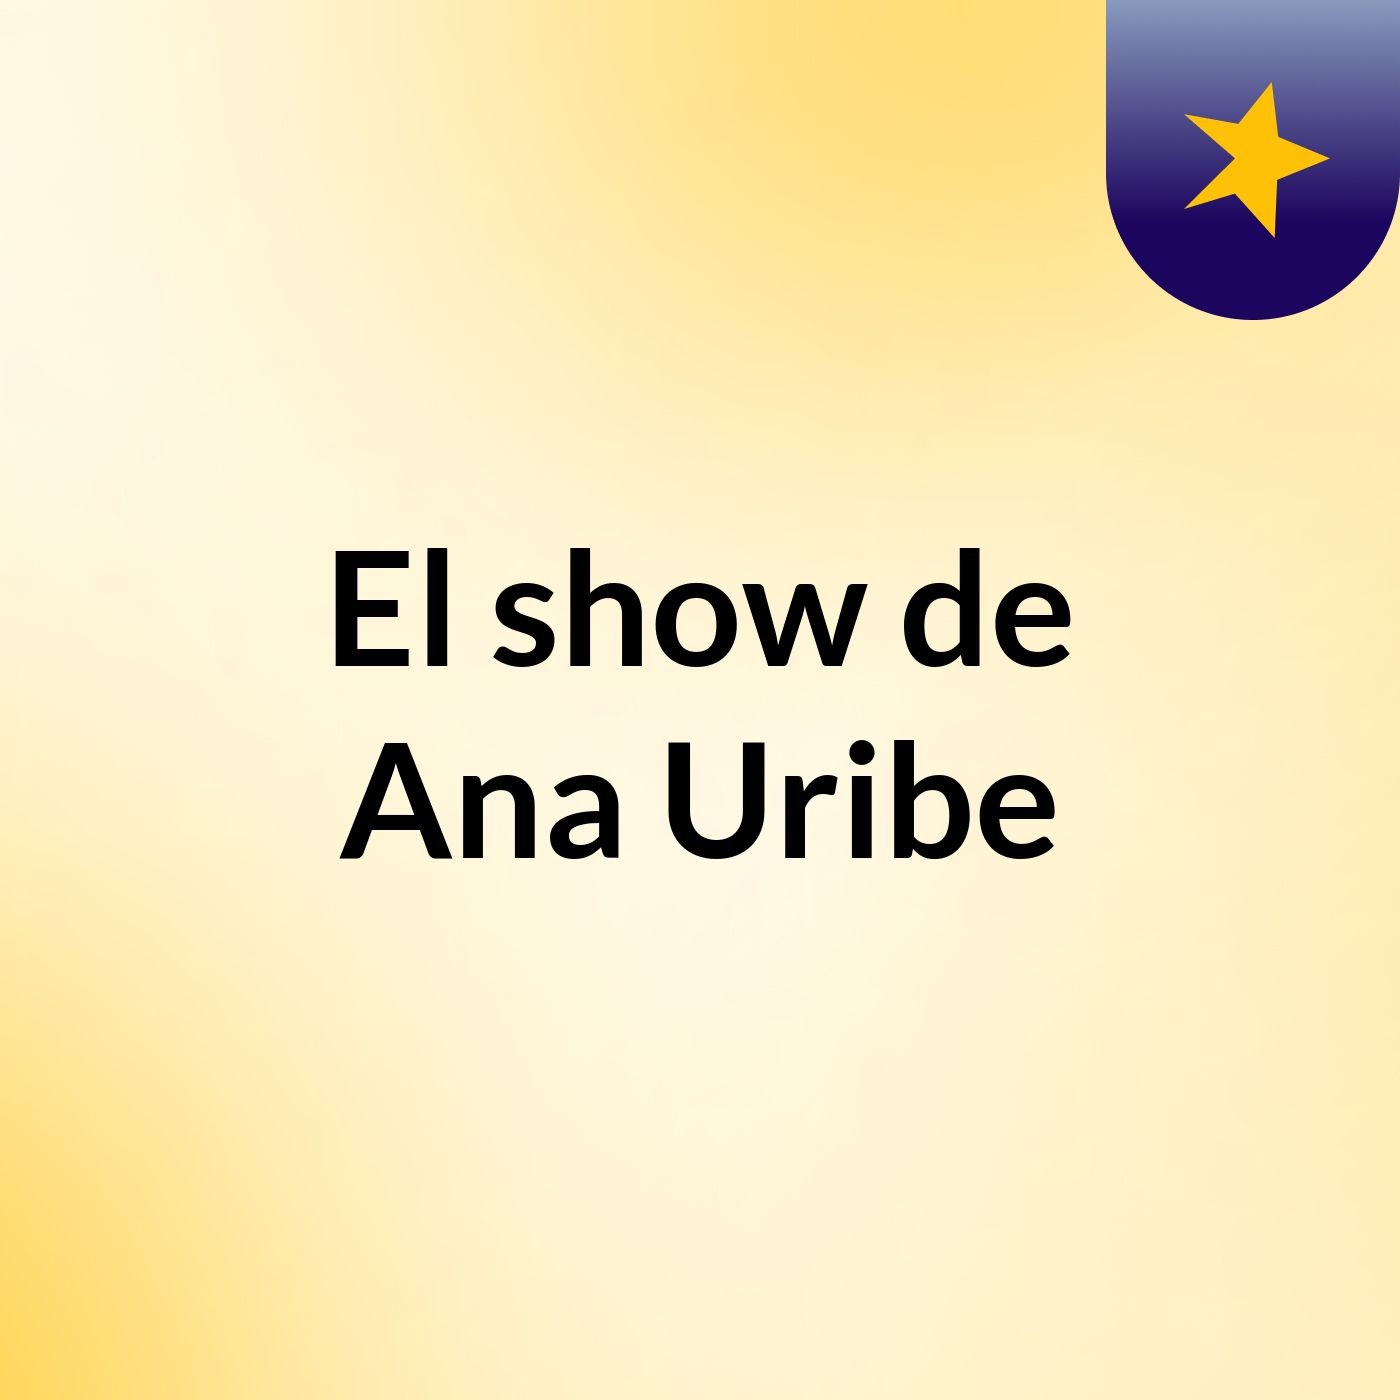 El show de Ana Uribe